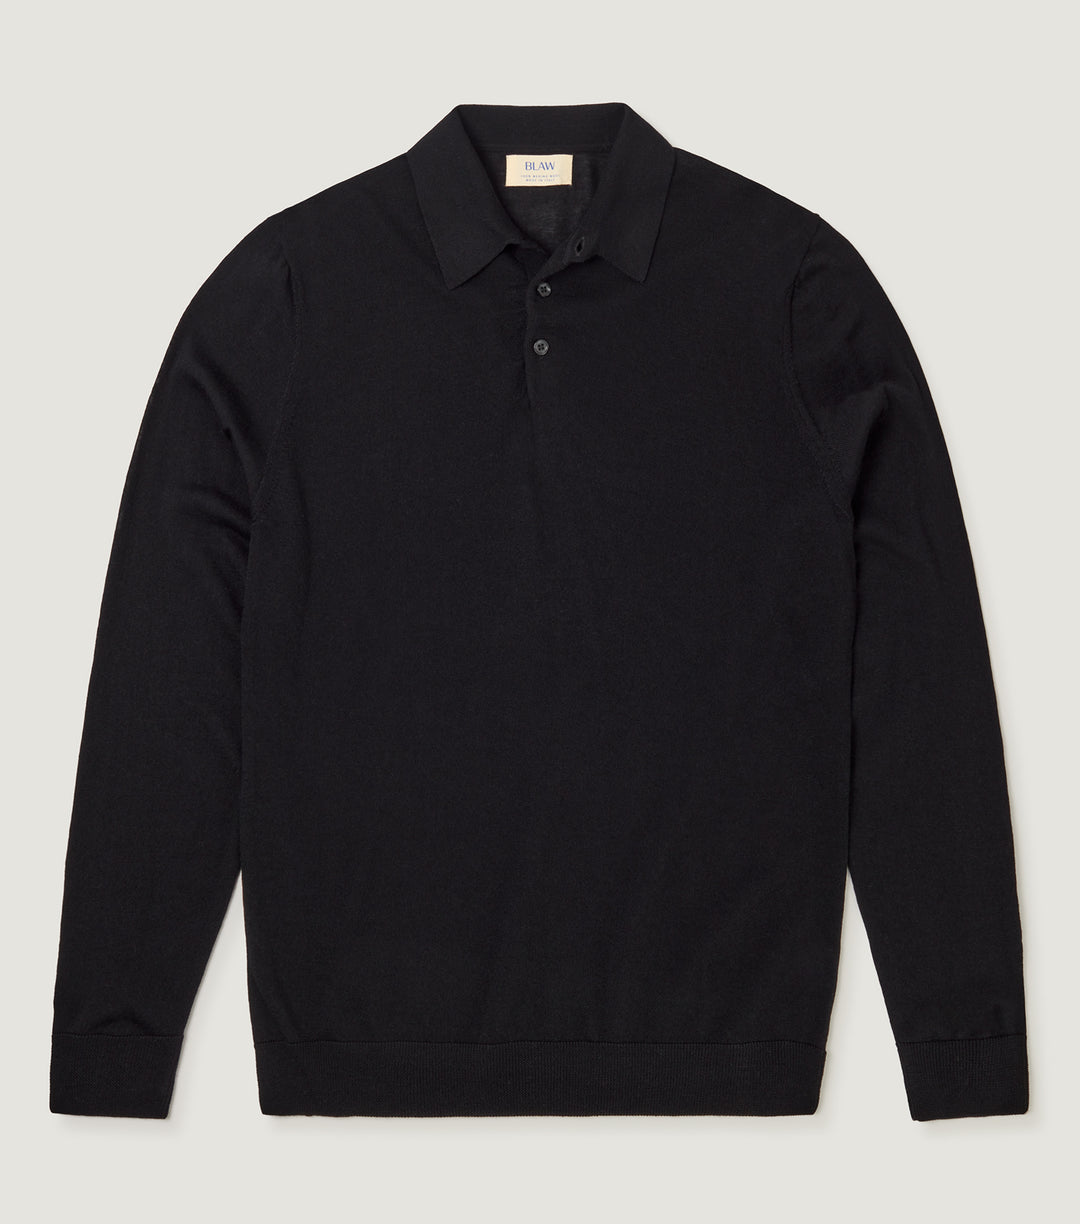 Long Sleeve Polo 100% Extra Fine Merino Wool Black - BLAW